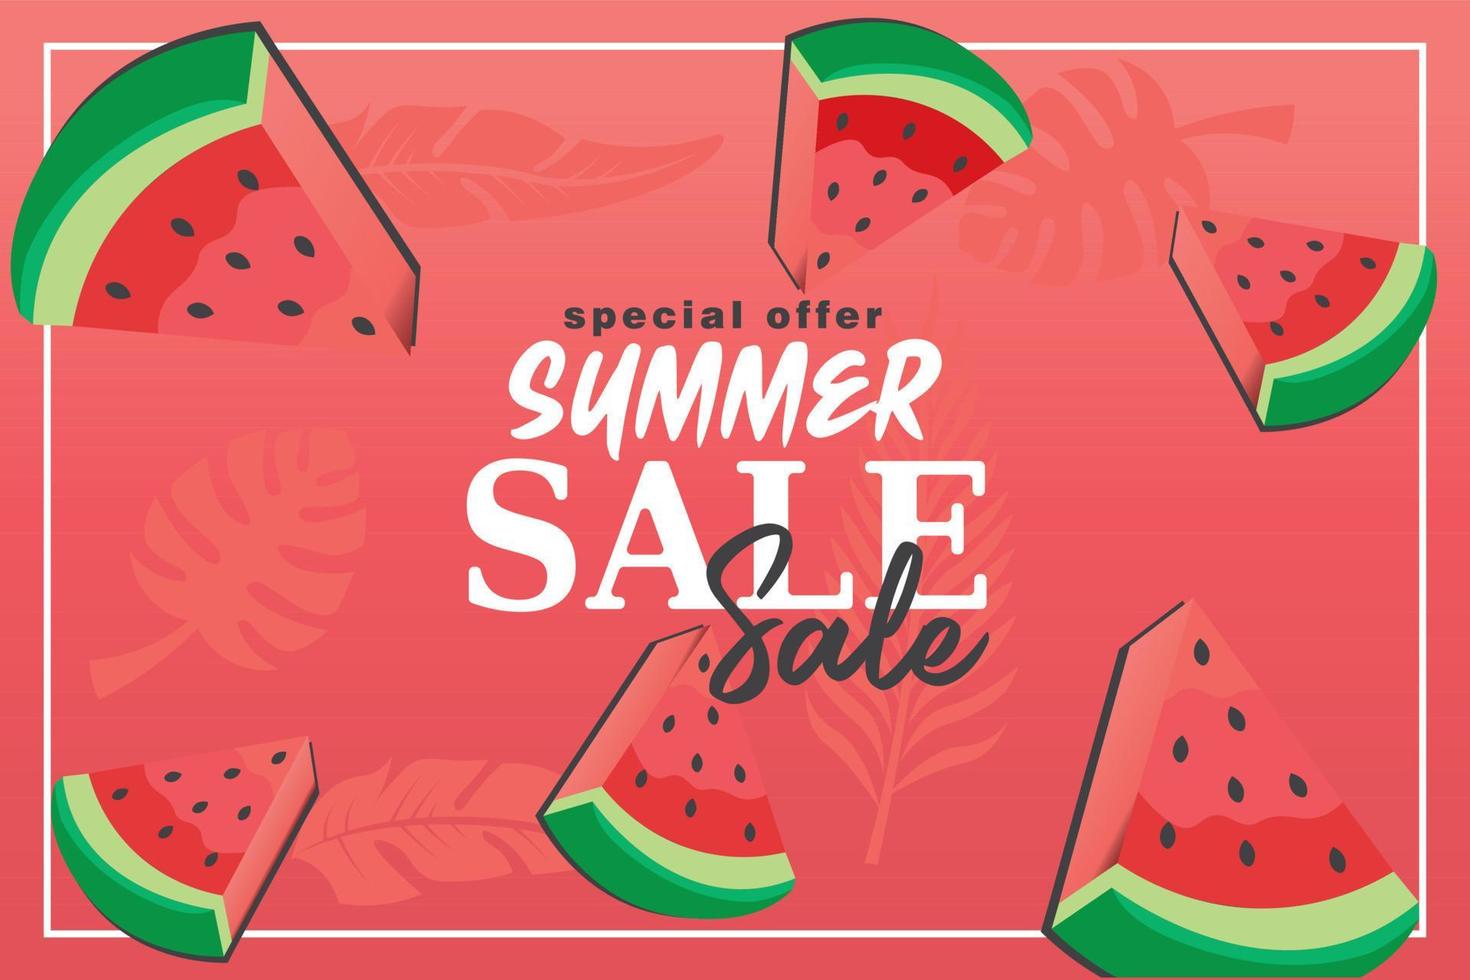 Summer sale, special offer vector, illustration vector